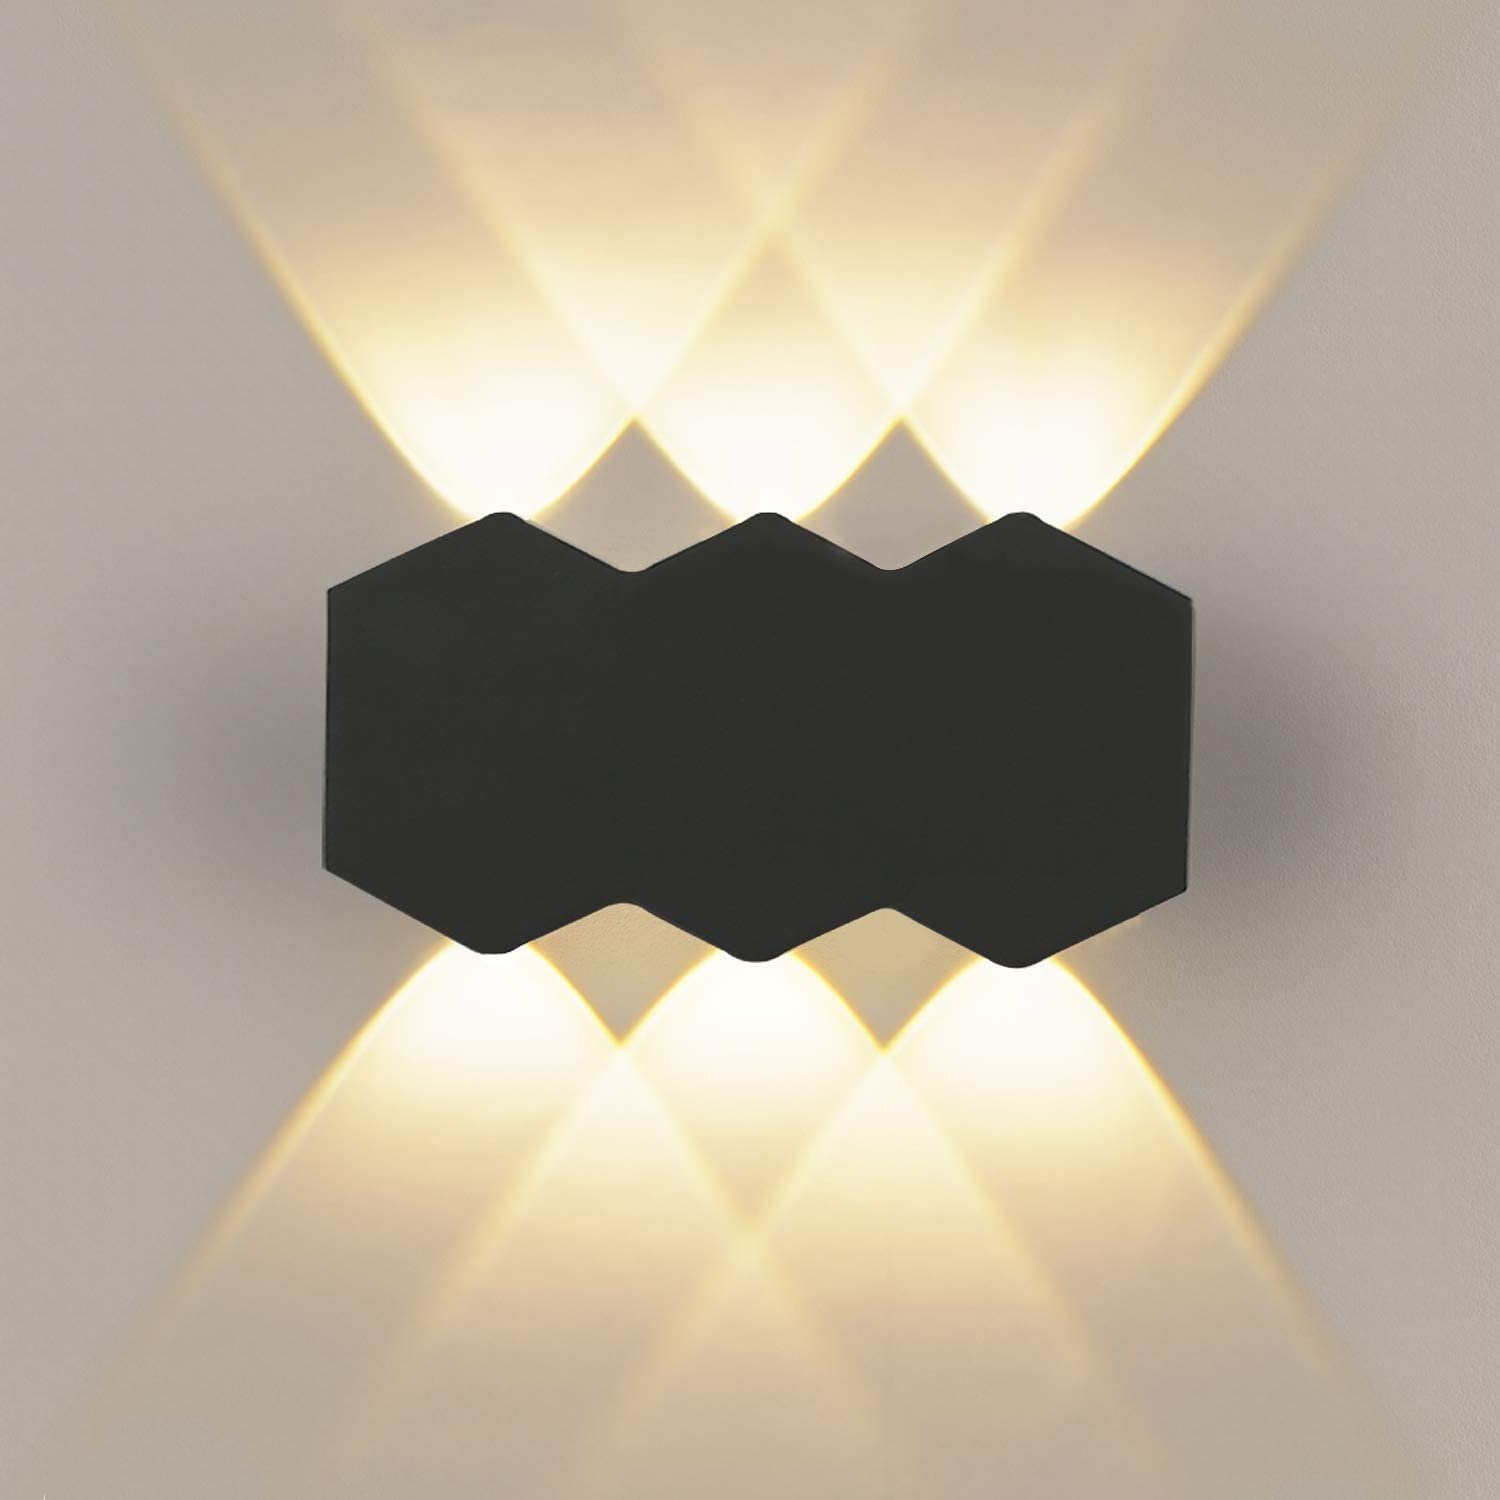 LED Wand Lampe Schlaf Zimmer Nacht Licht Strahler Kugel Treppenhaus Beleuchtung 